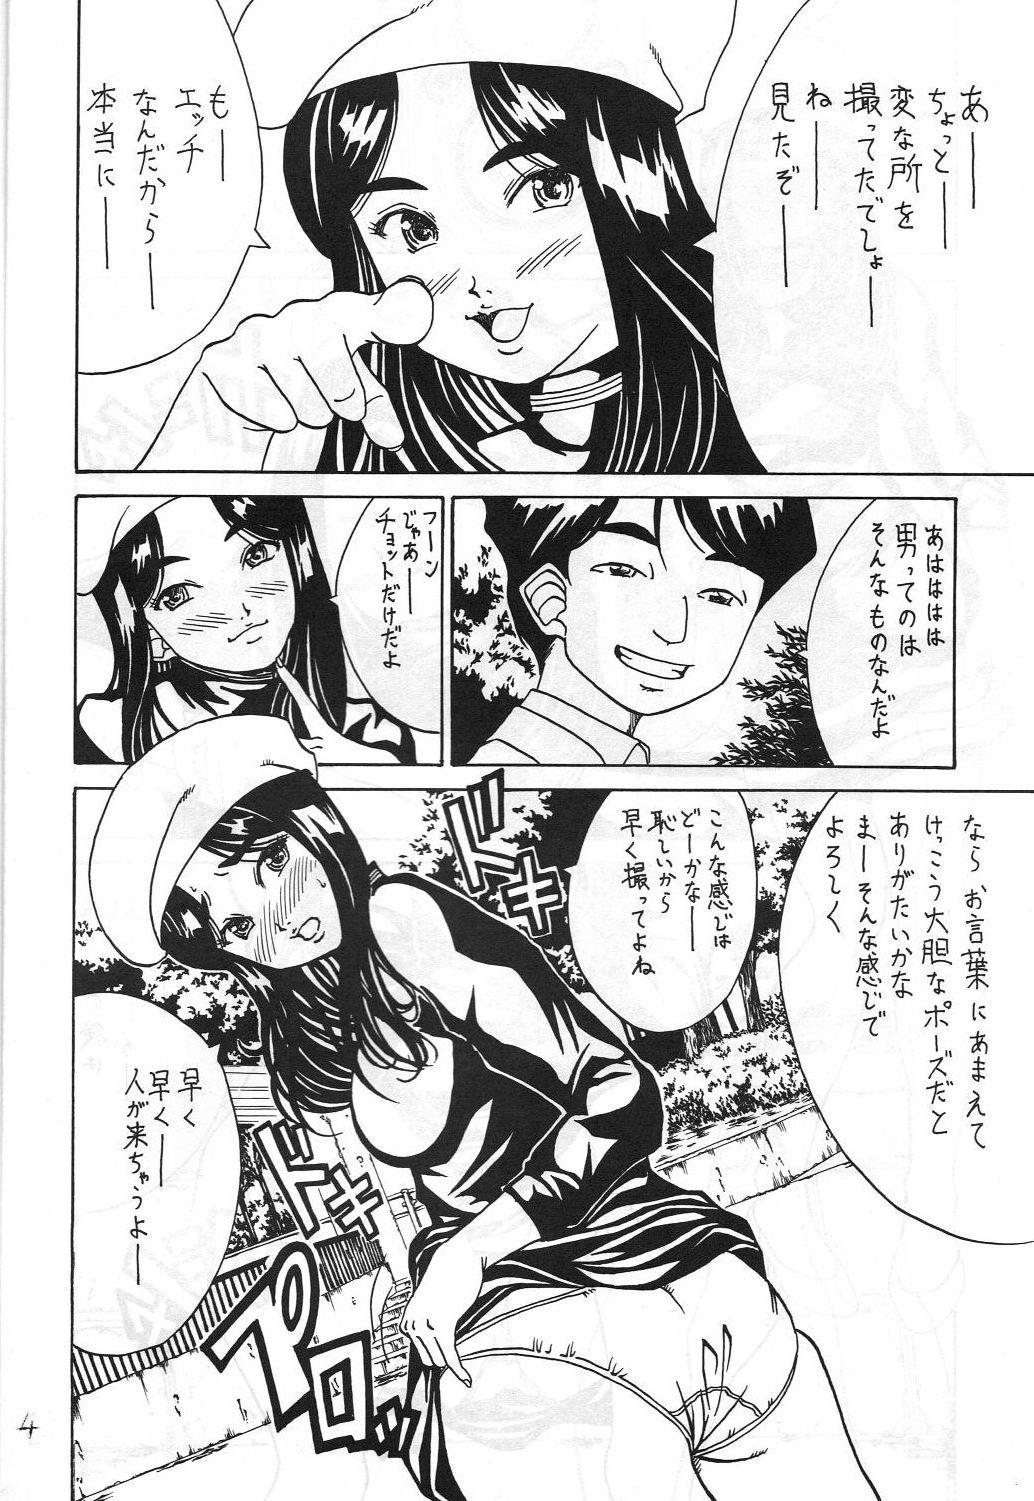 Fun Kikansha ha Ore no Johnson in my life (Mitake) Eanakuoto (Ah! Megami-sama/Ah! My Goddess) - Ah my goddess Time - Page 5